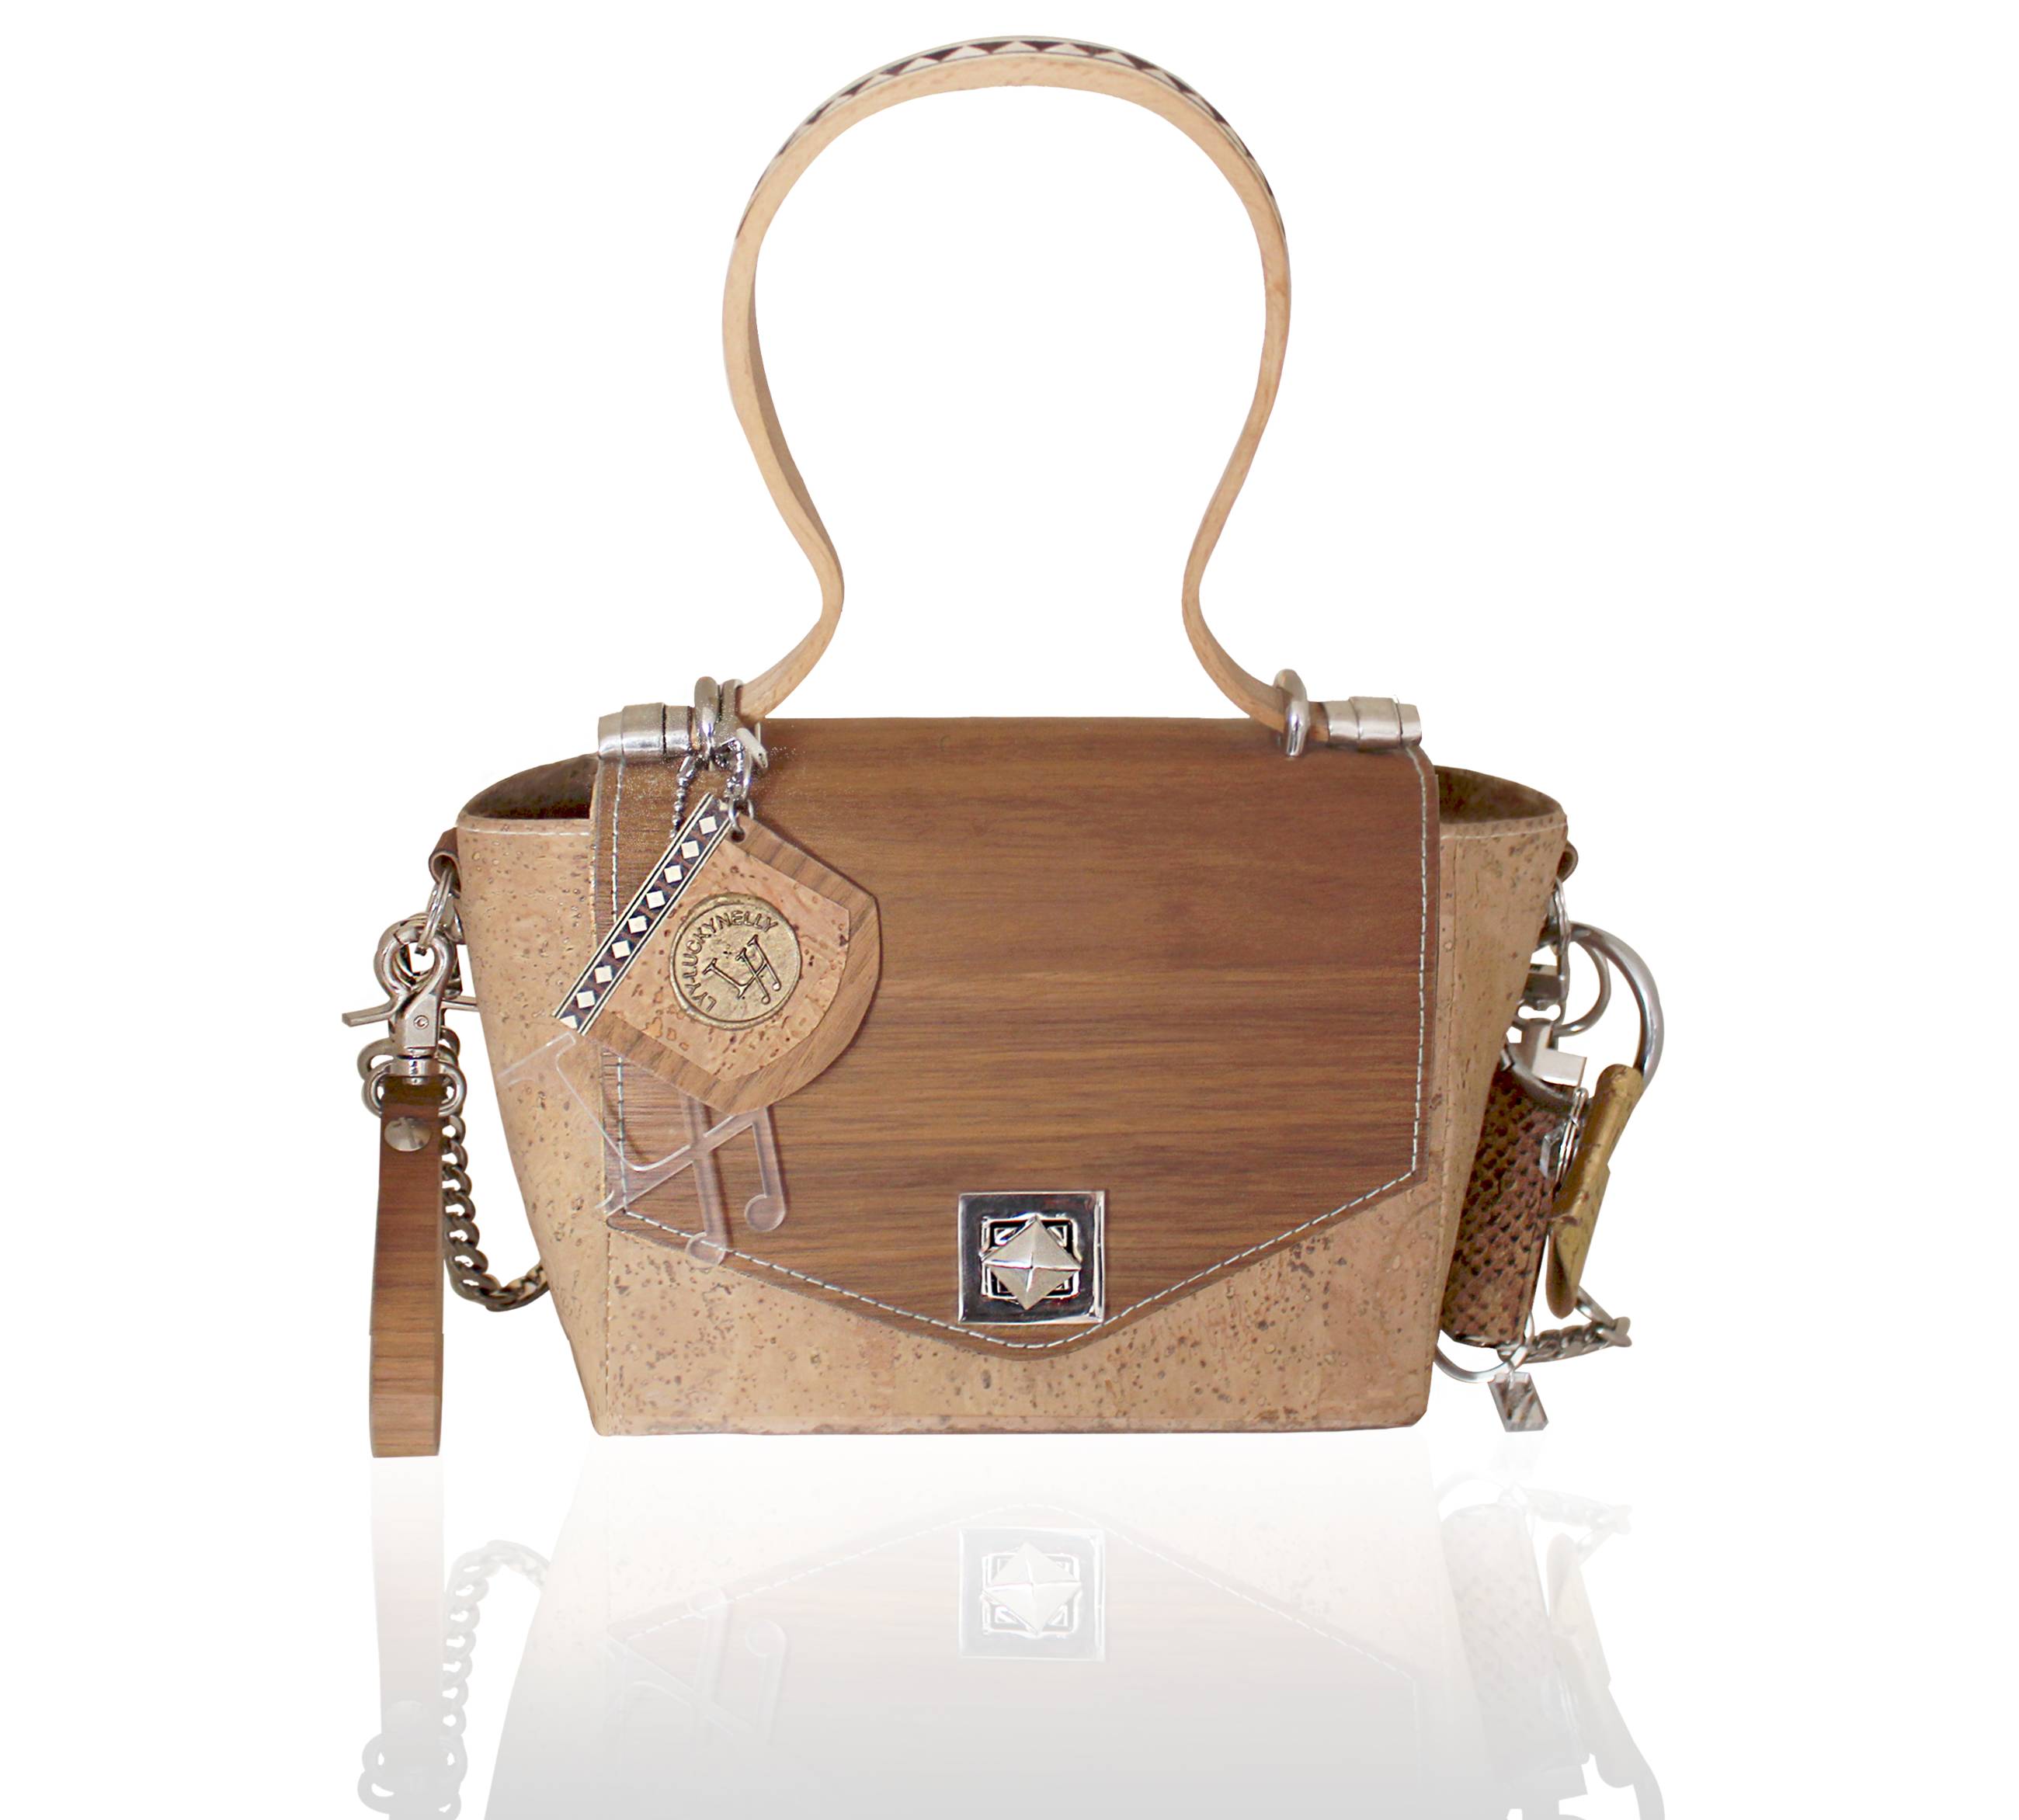 Vegan and Sustain luxury designer handbag